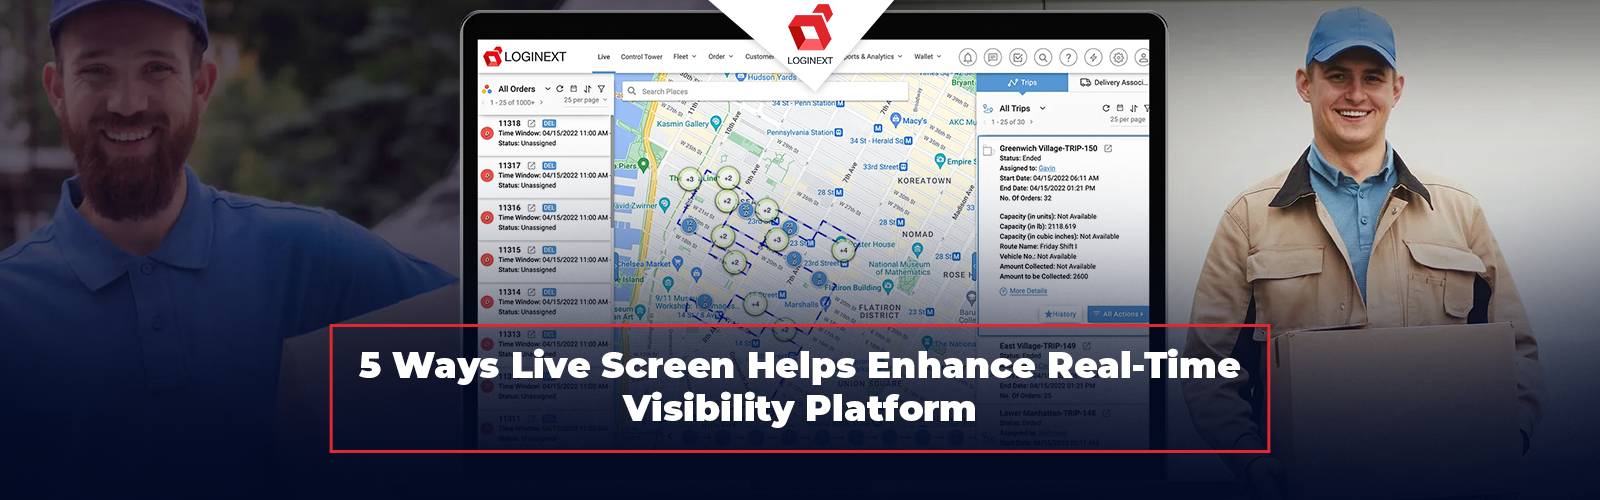 Live Screen Enhances Real-time Visibility Platform